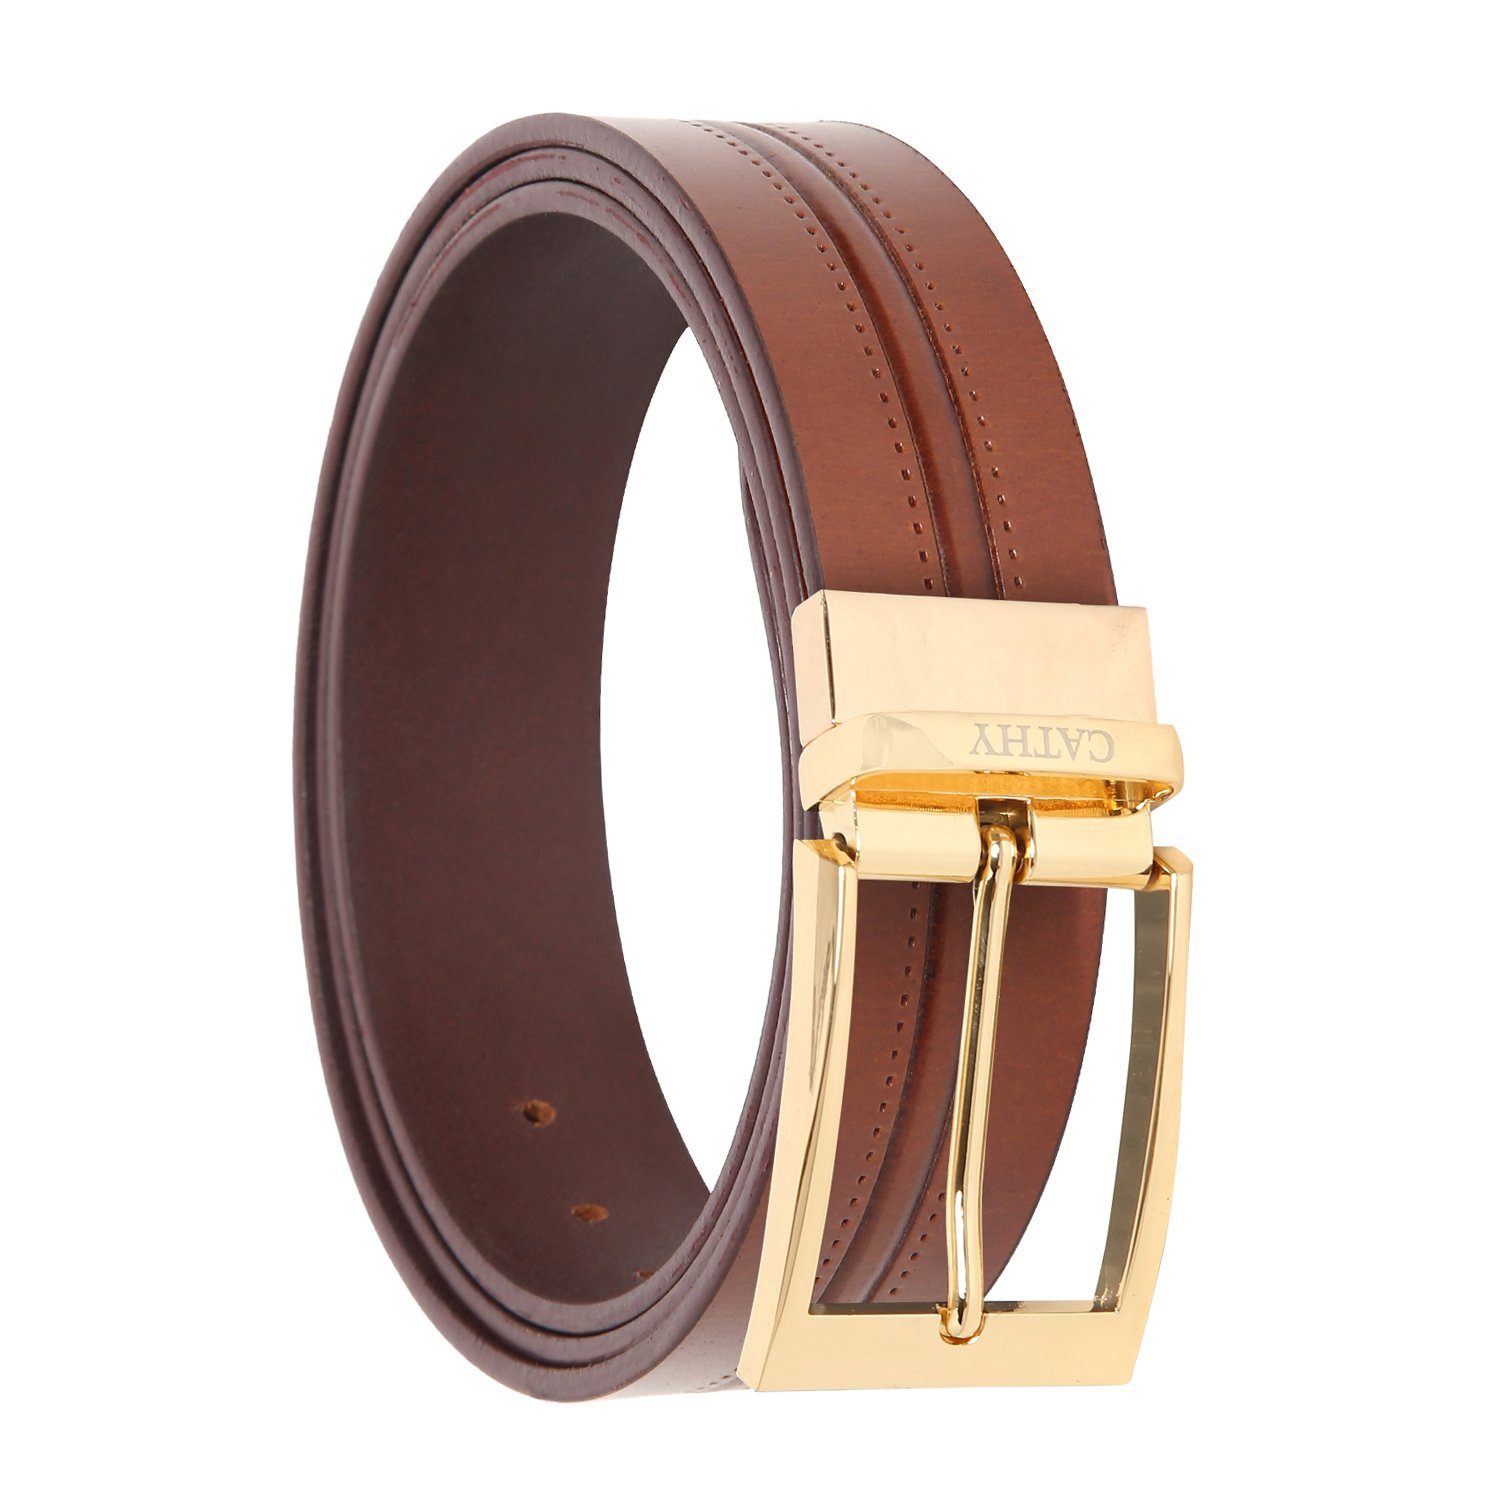 Men's Classic Dress Tan Colour Belt Top Grain Italian Leather with Golden Metal Buckle Cathy-London 